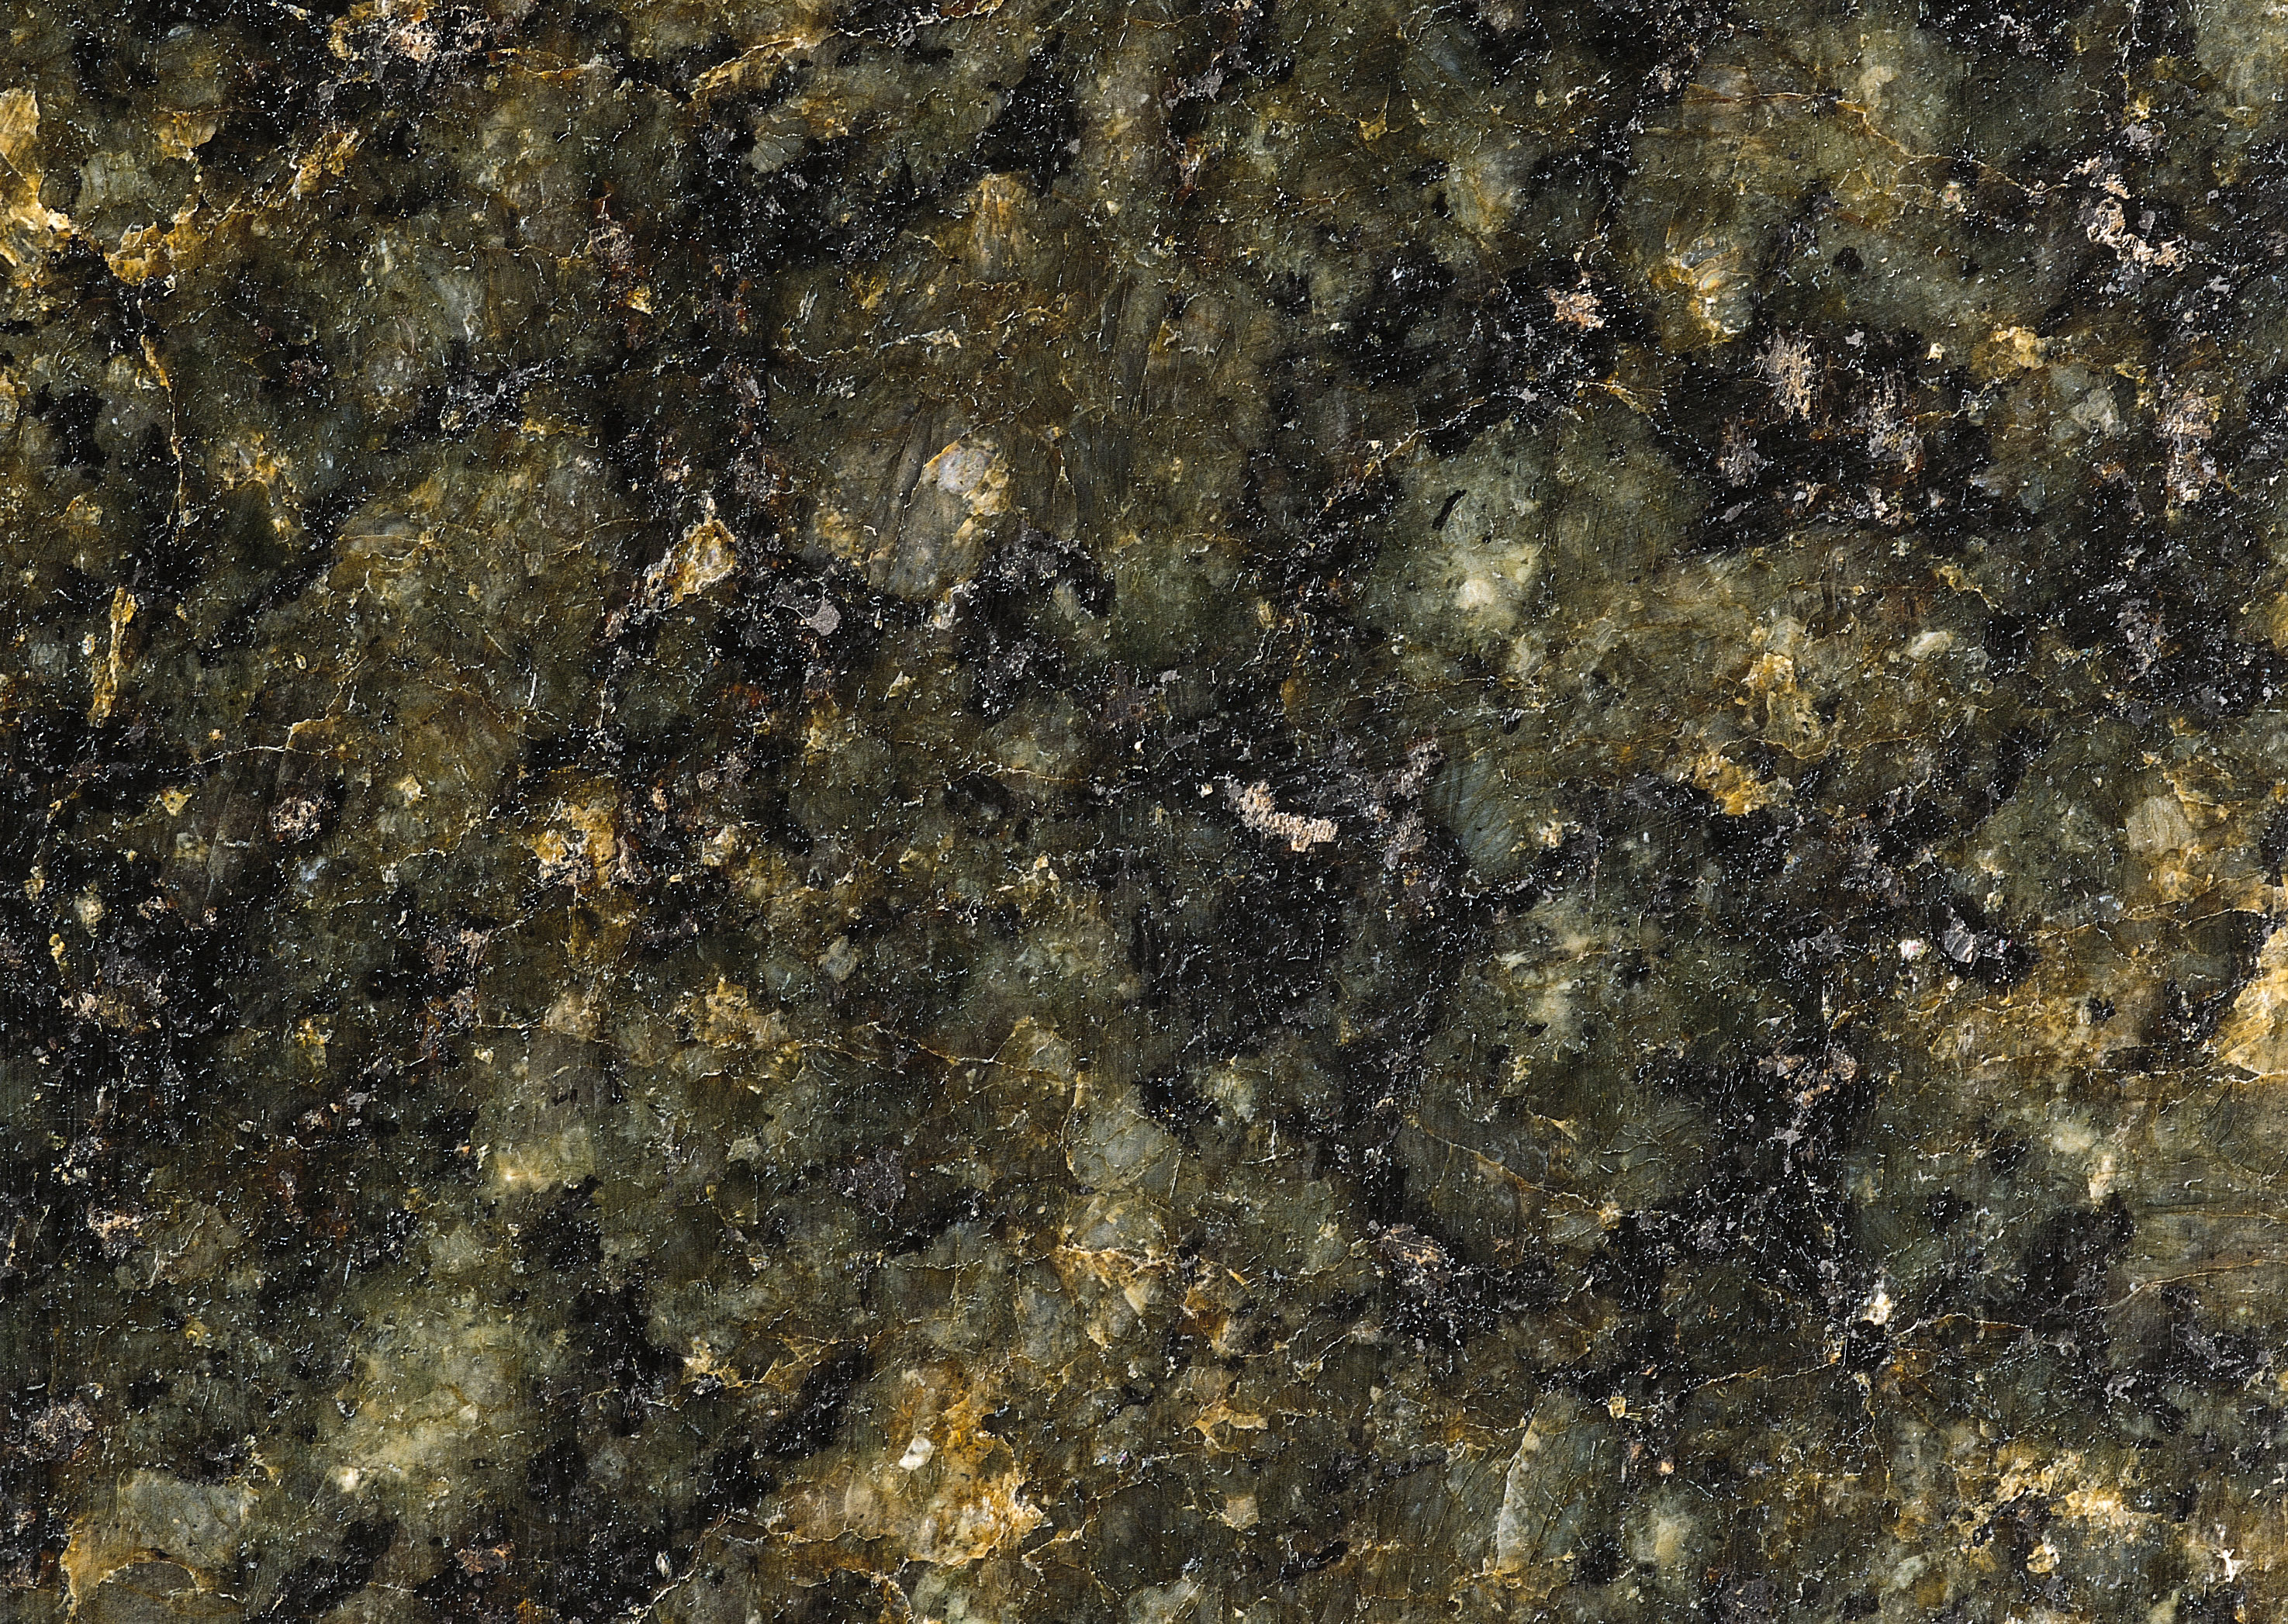 Granite texture background image, Granite image